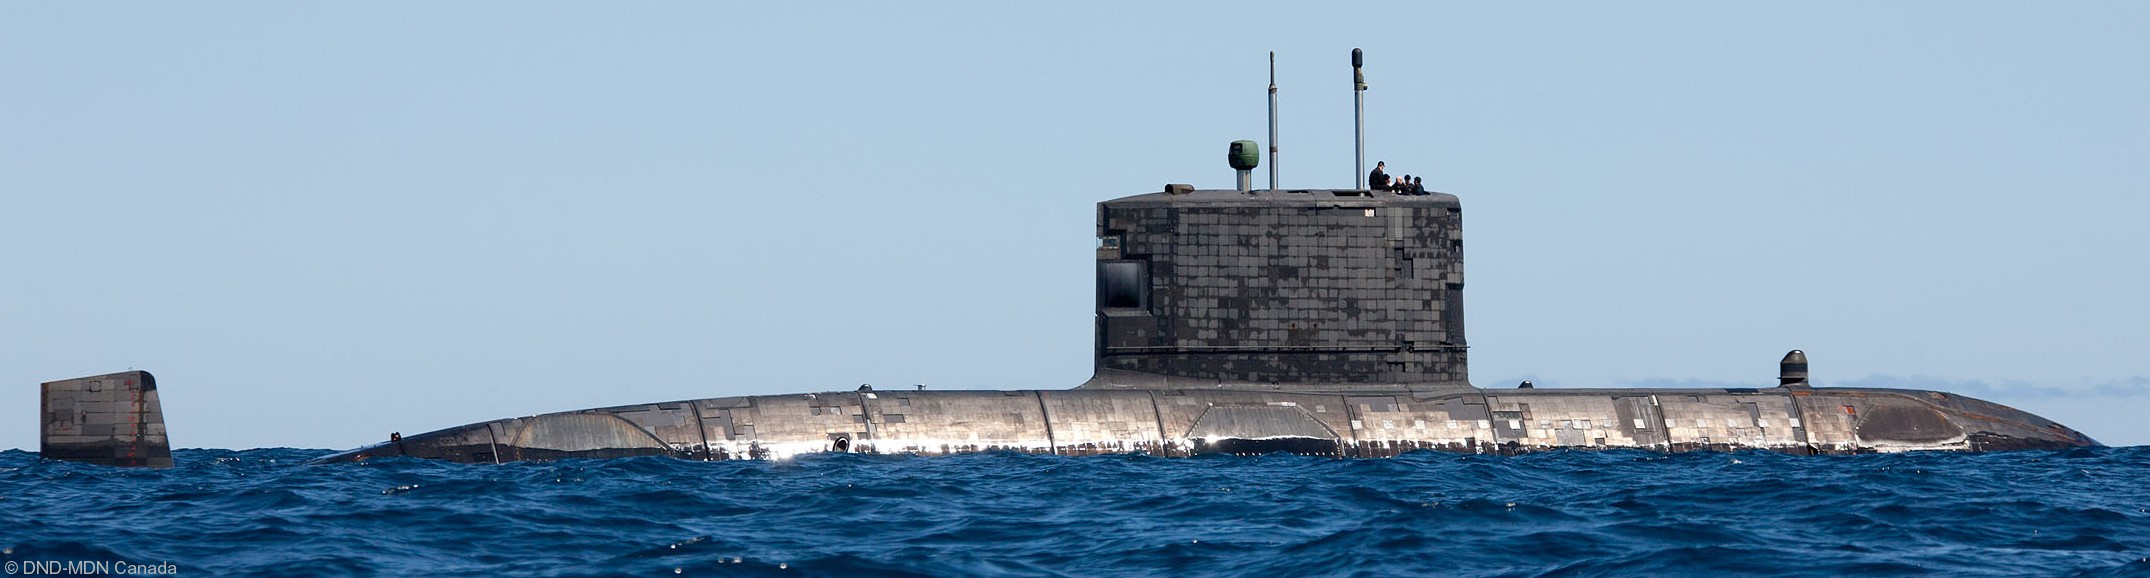 ssk-878 hmcs corner brook victoria upholder class patrol submarine ncsm royal canadian navy 13